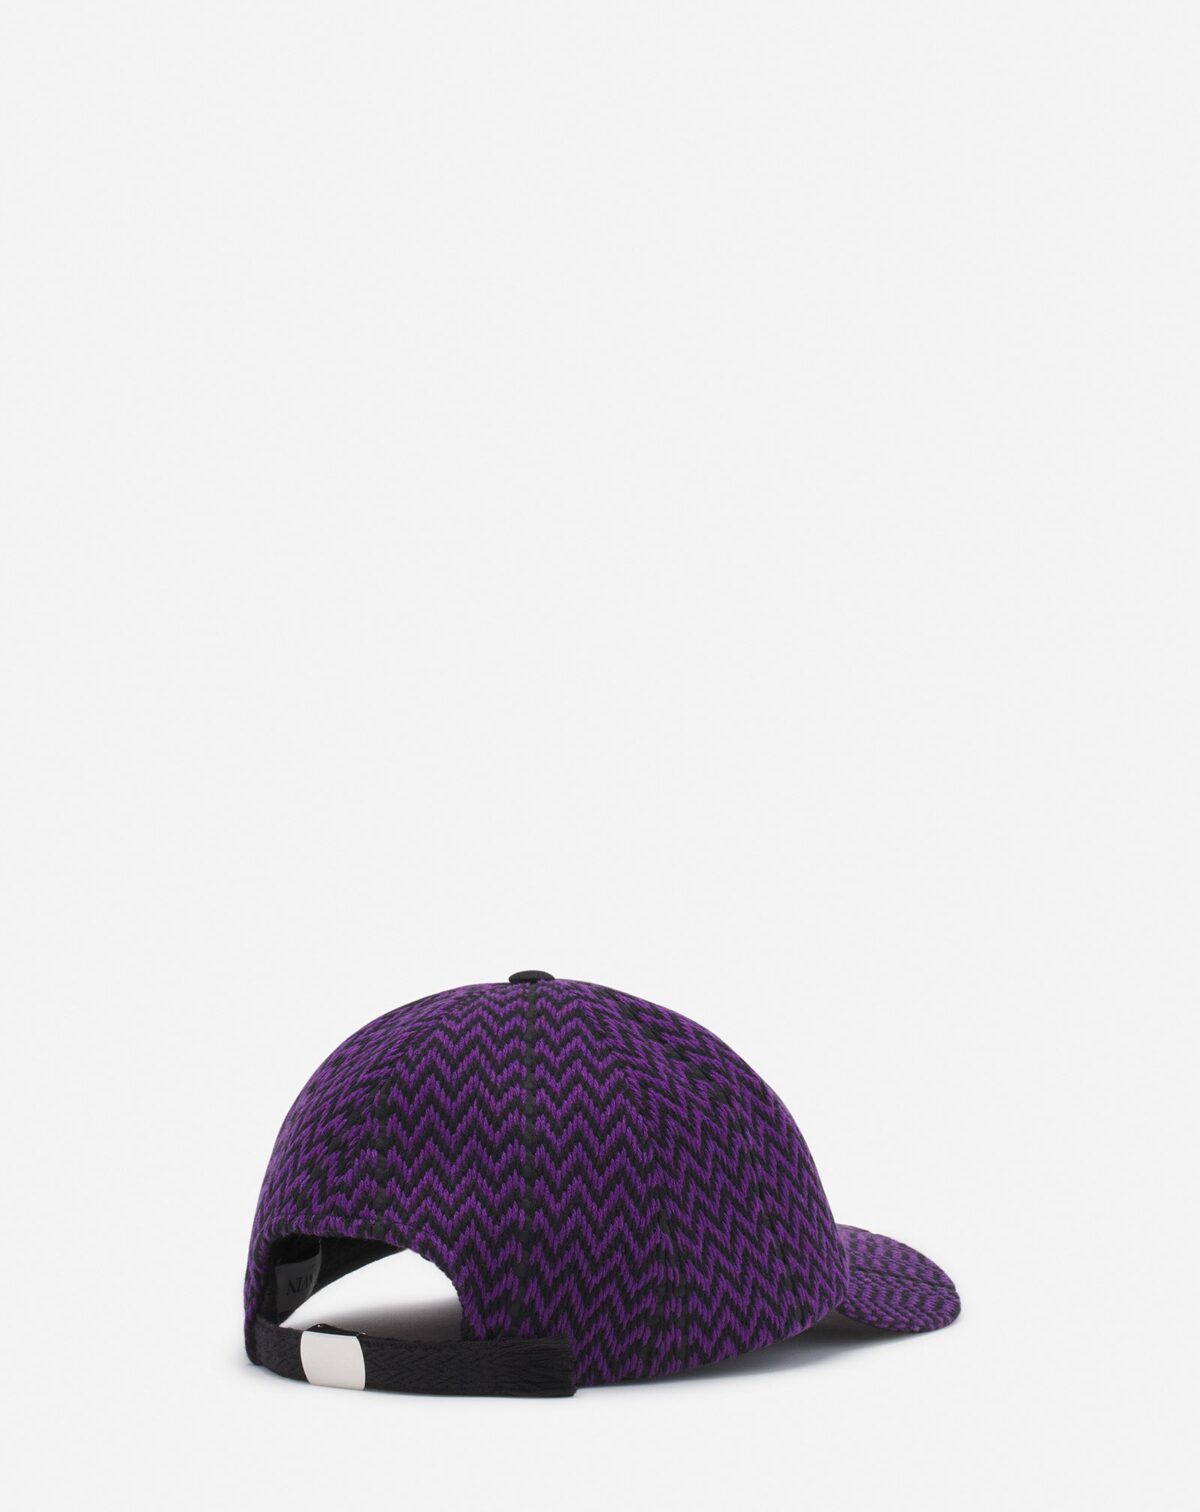 LANVIN X FUTURE CURB COTTON CAP Purple